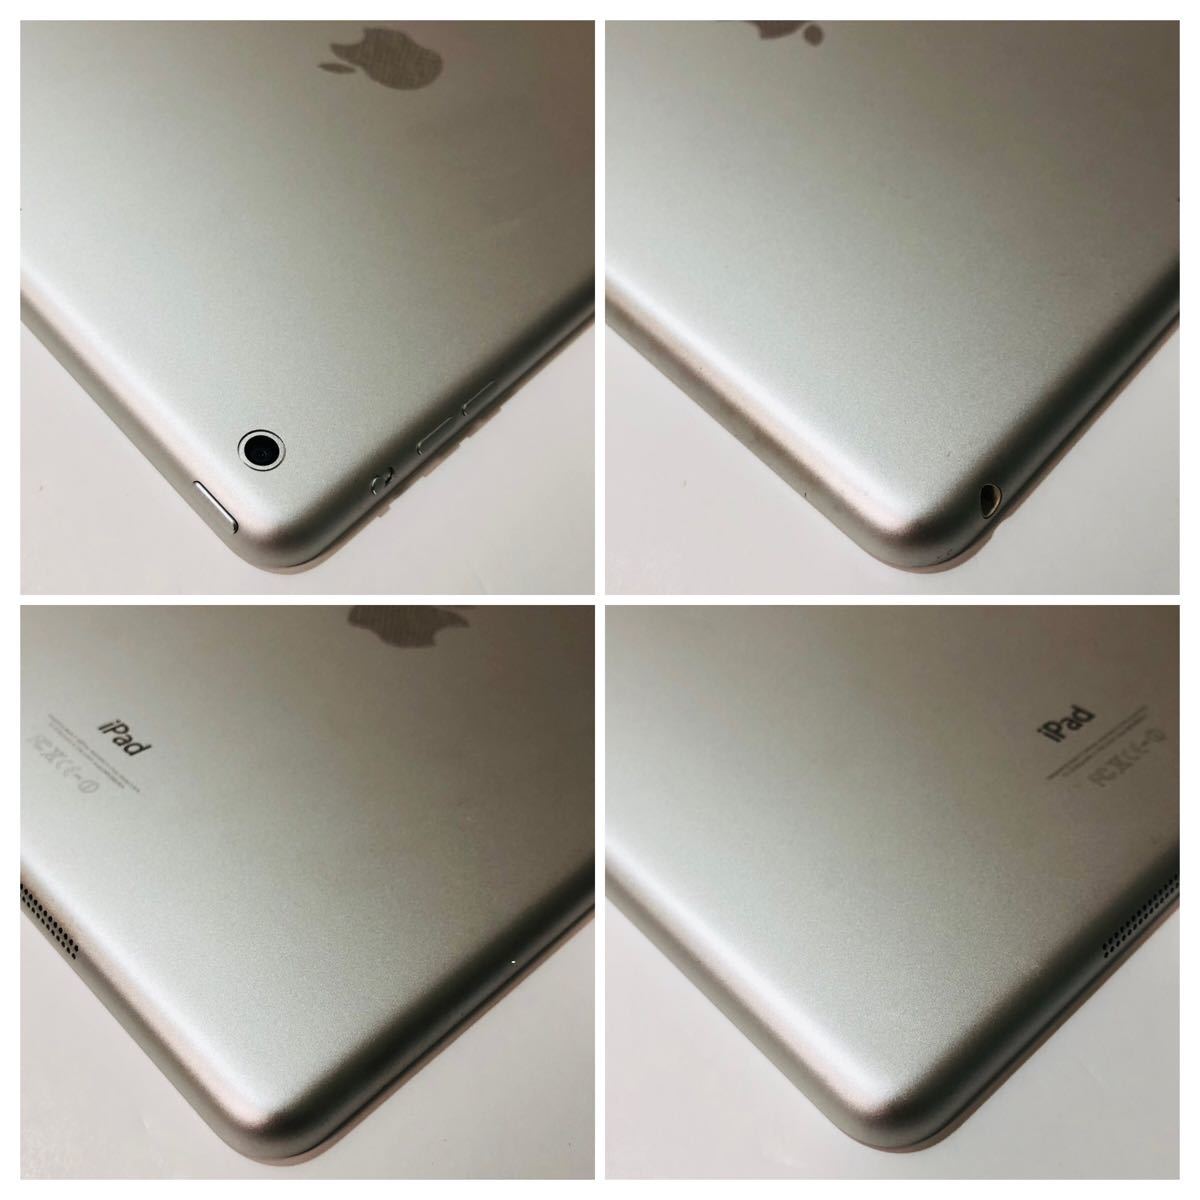 iPad Air 16GB wifiモデル 管理番号 0625｜PayPayフリマ